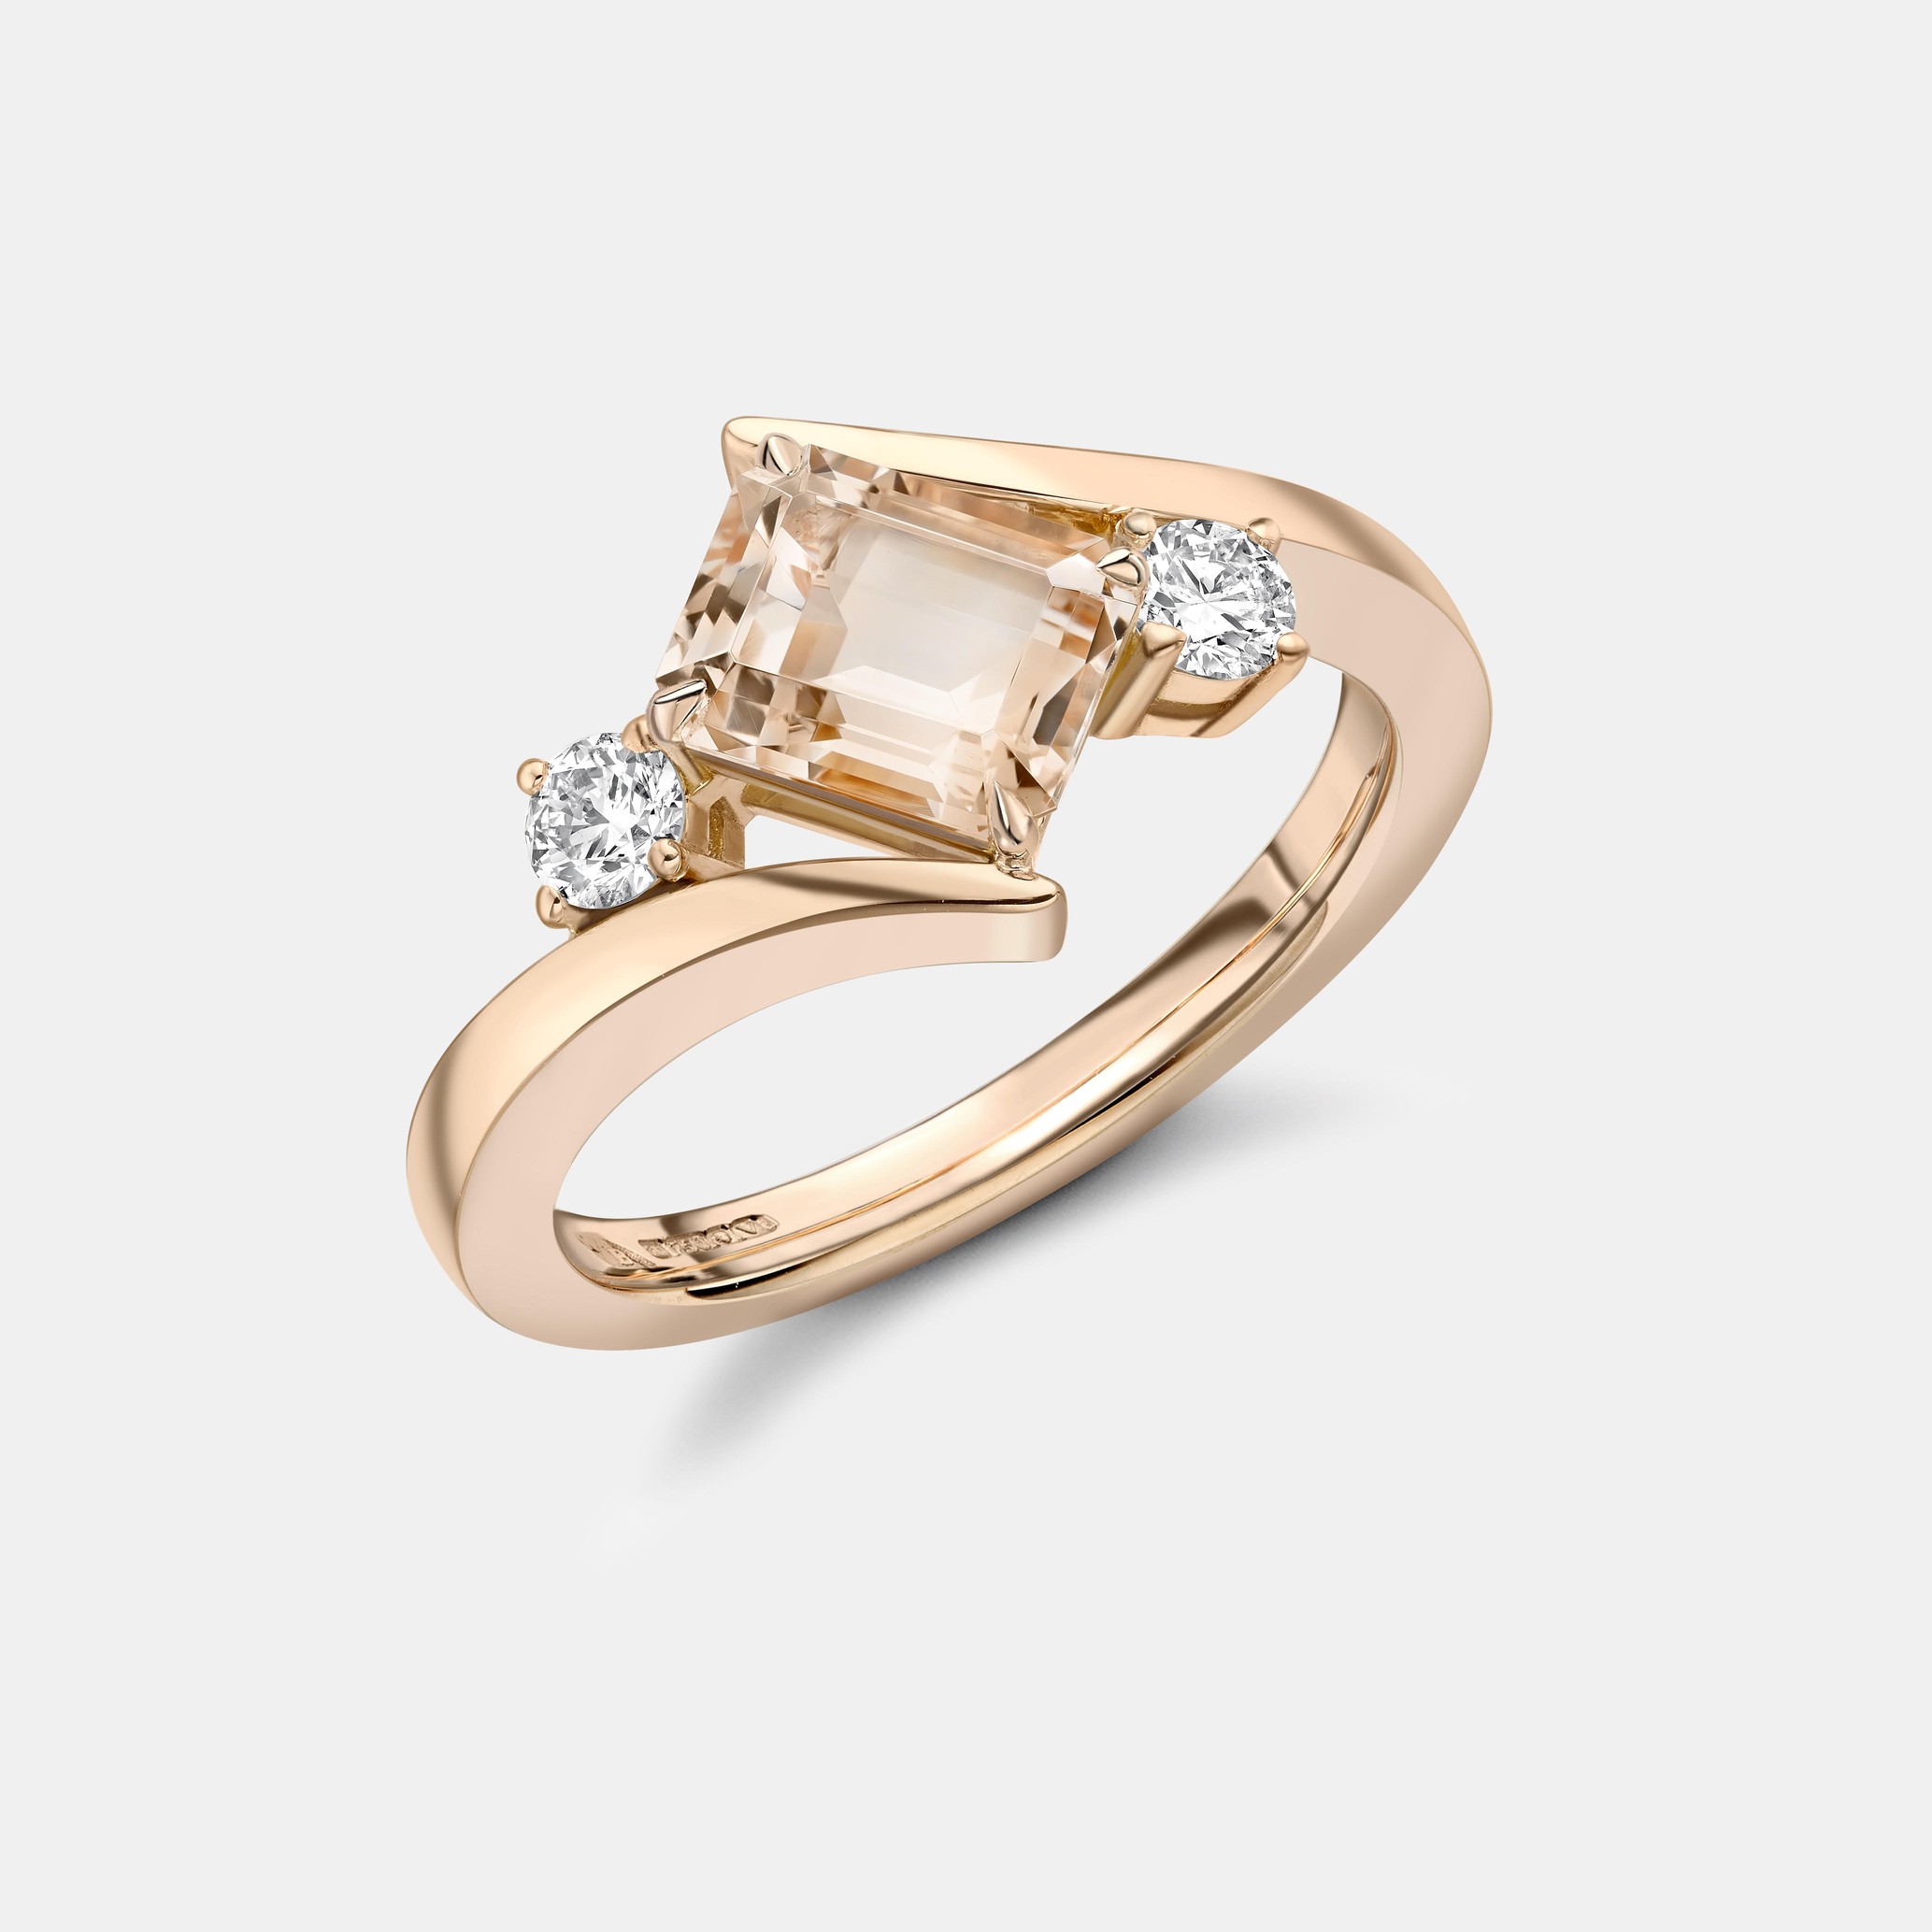 The Emerald Cut Morganite and Diamond Ring